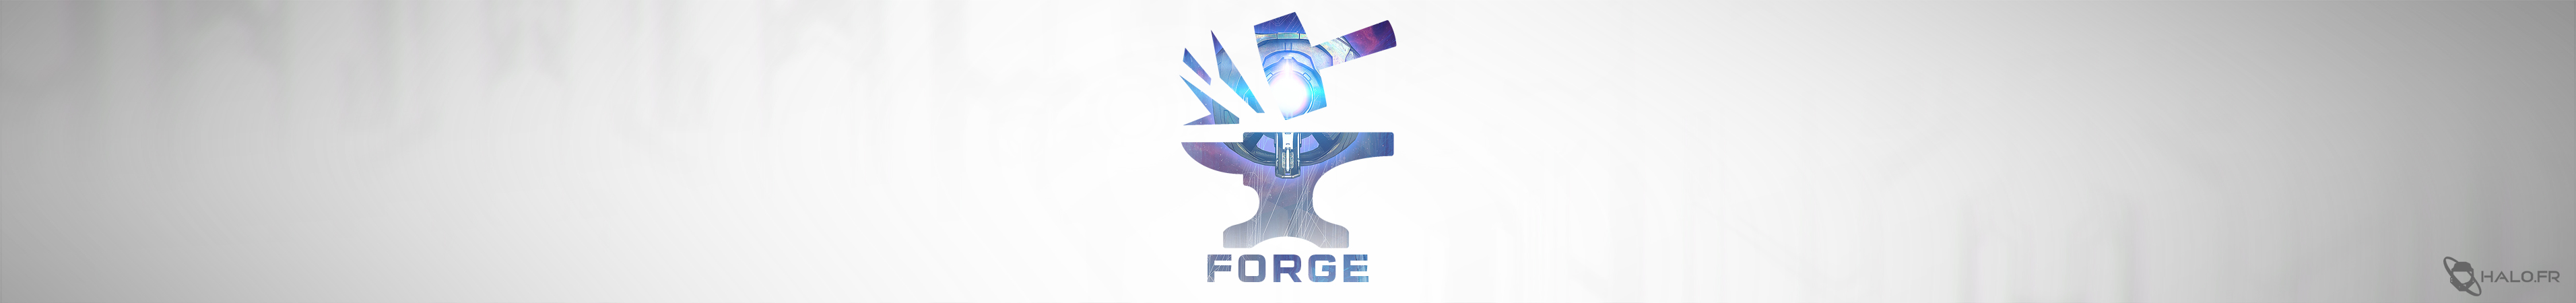 H5 Forge | Halo.fr